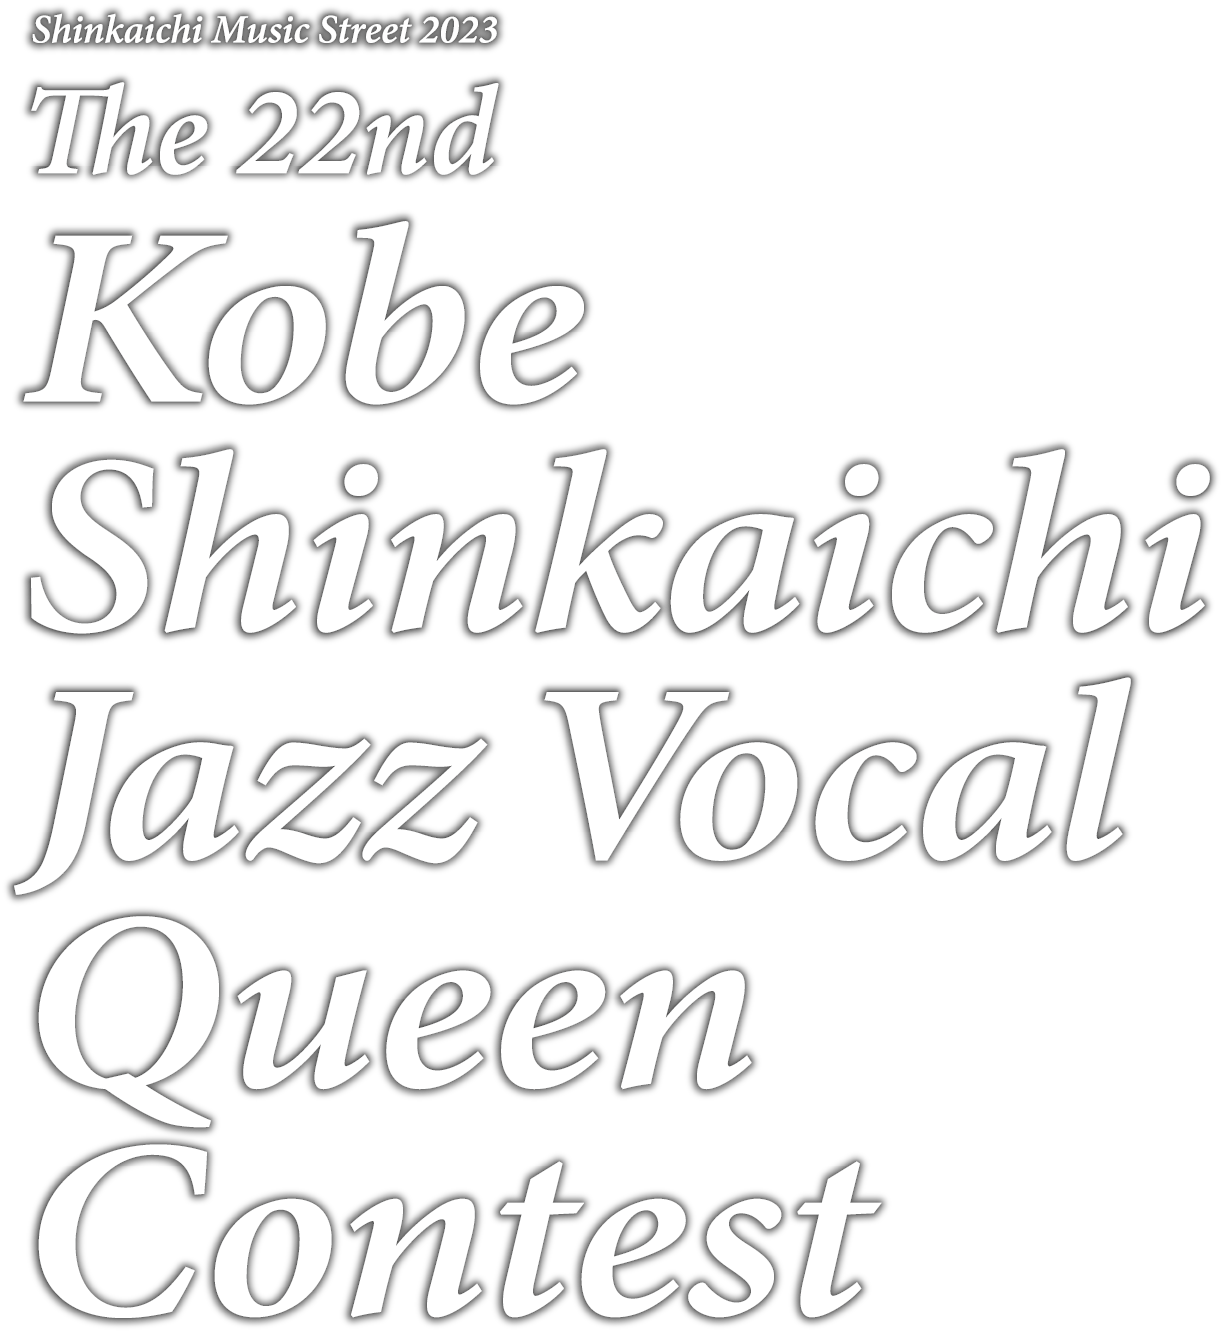 the 22nd Shinkaichi Jazz Vocal Queen Contest